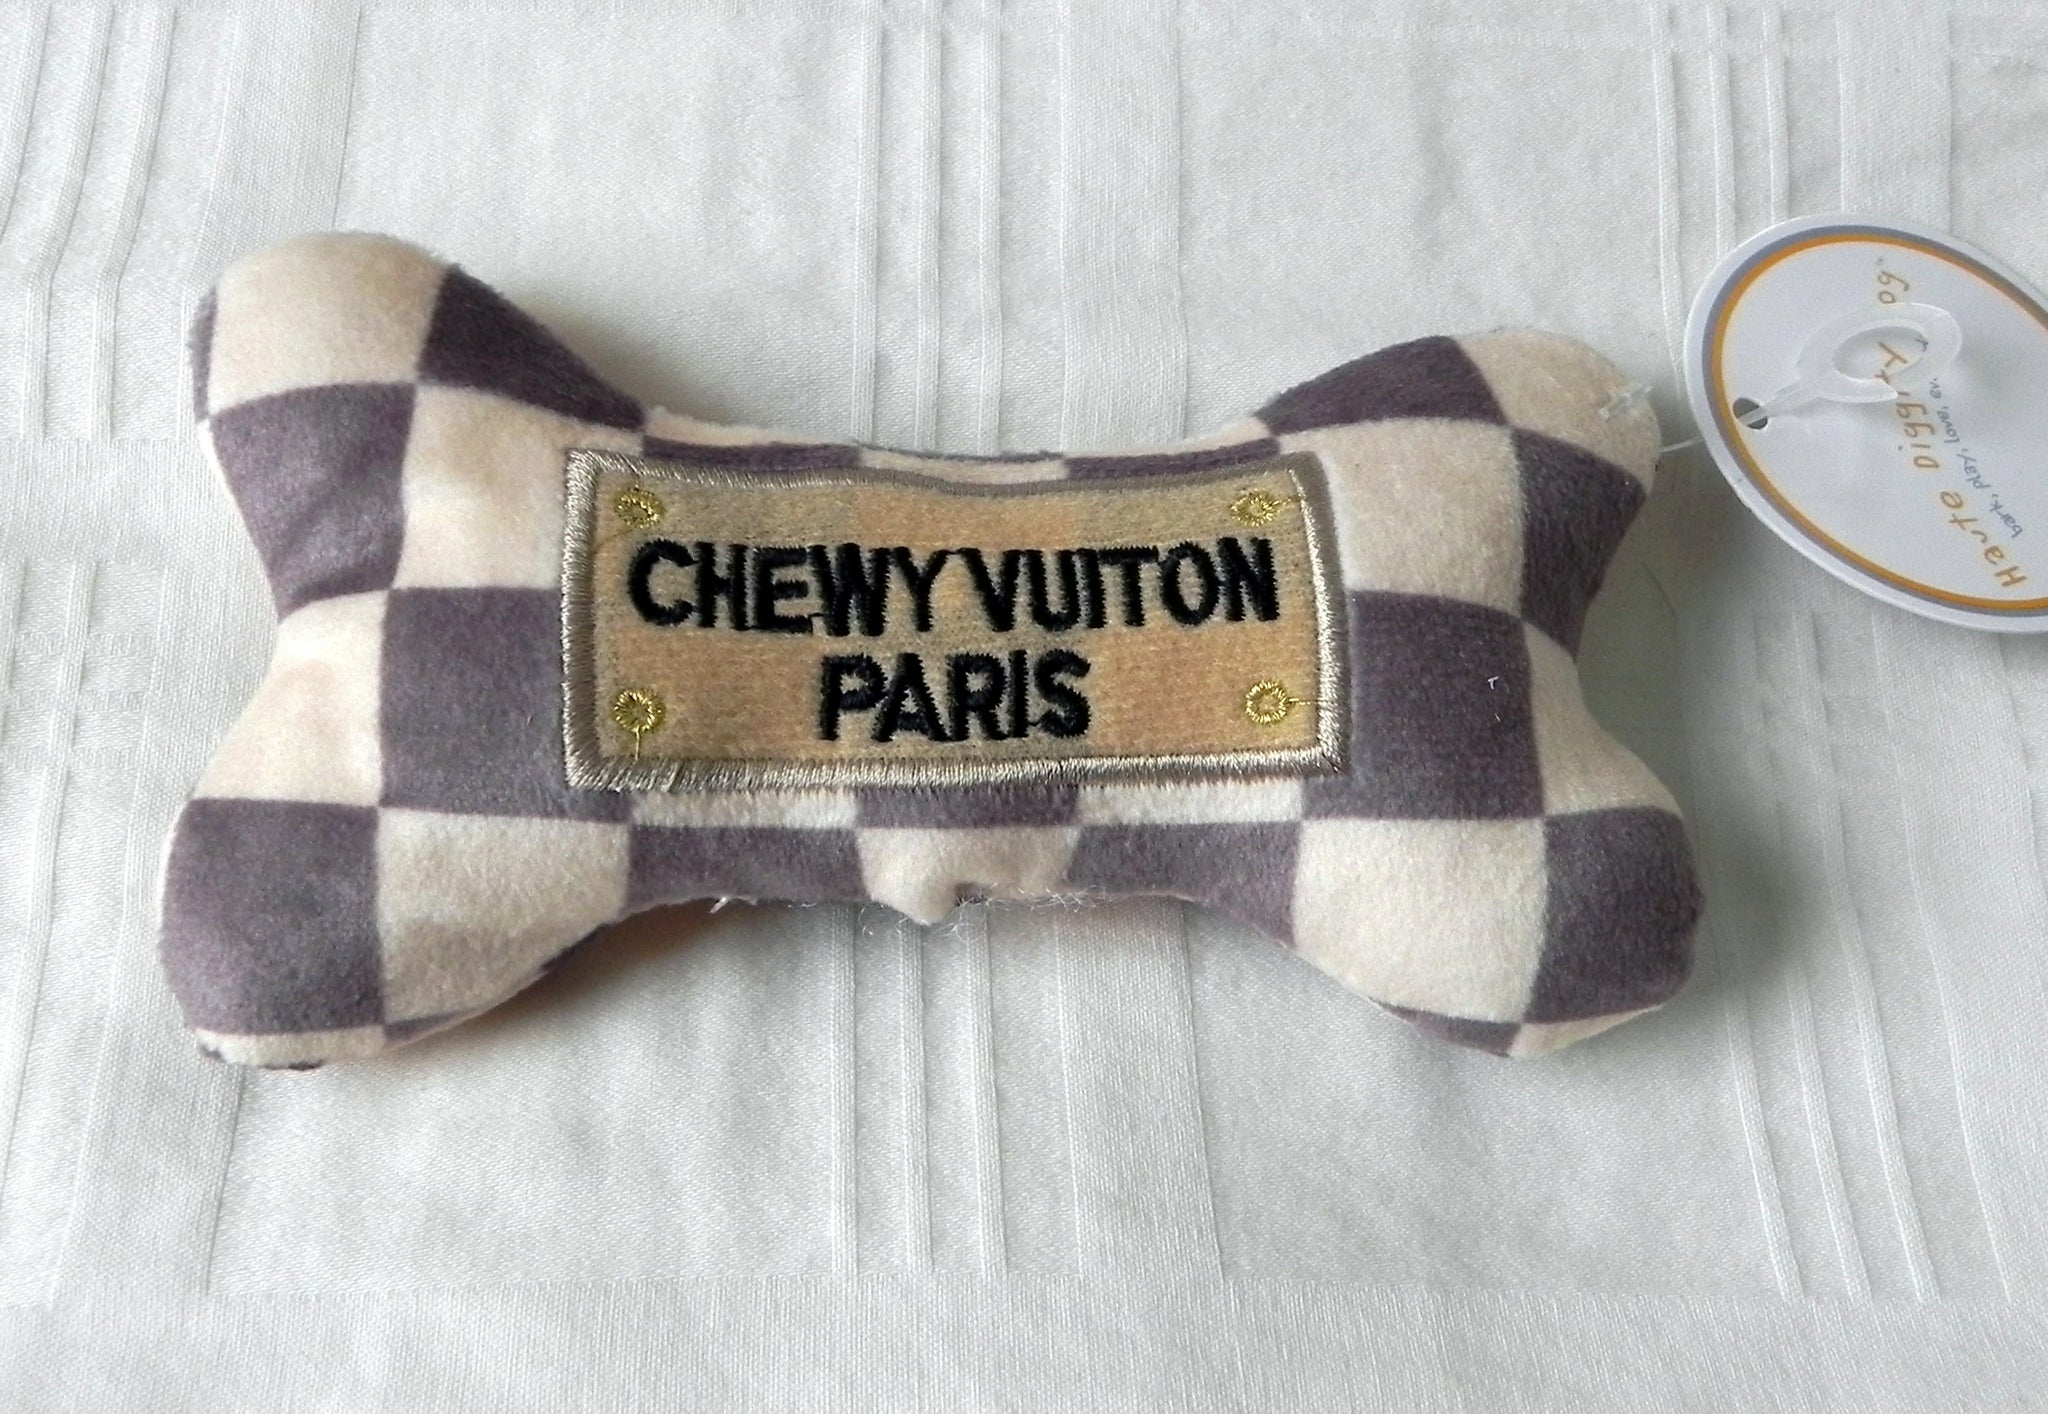 Chewy Vuiton Paris Bone